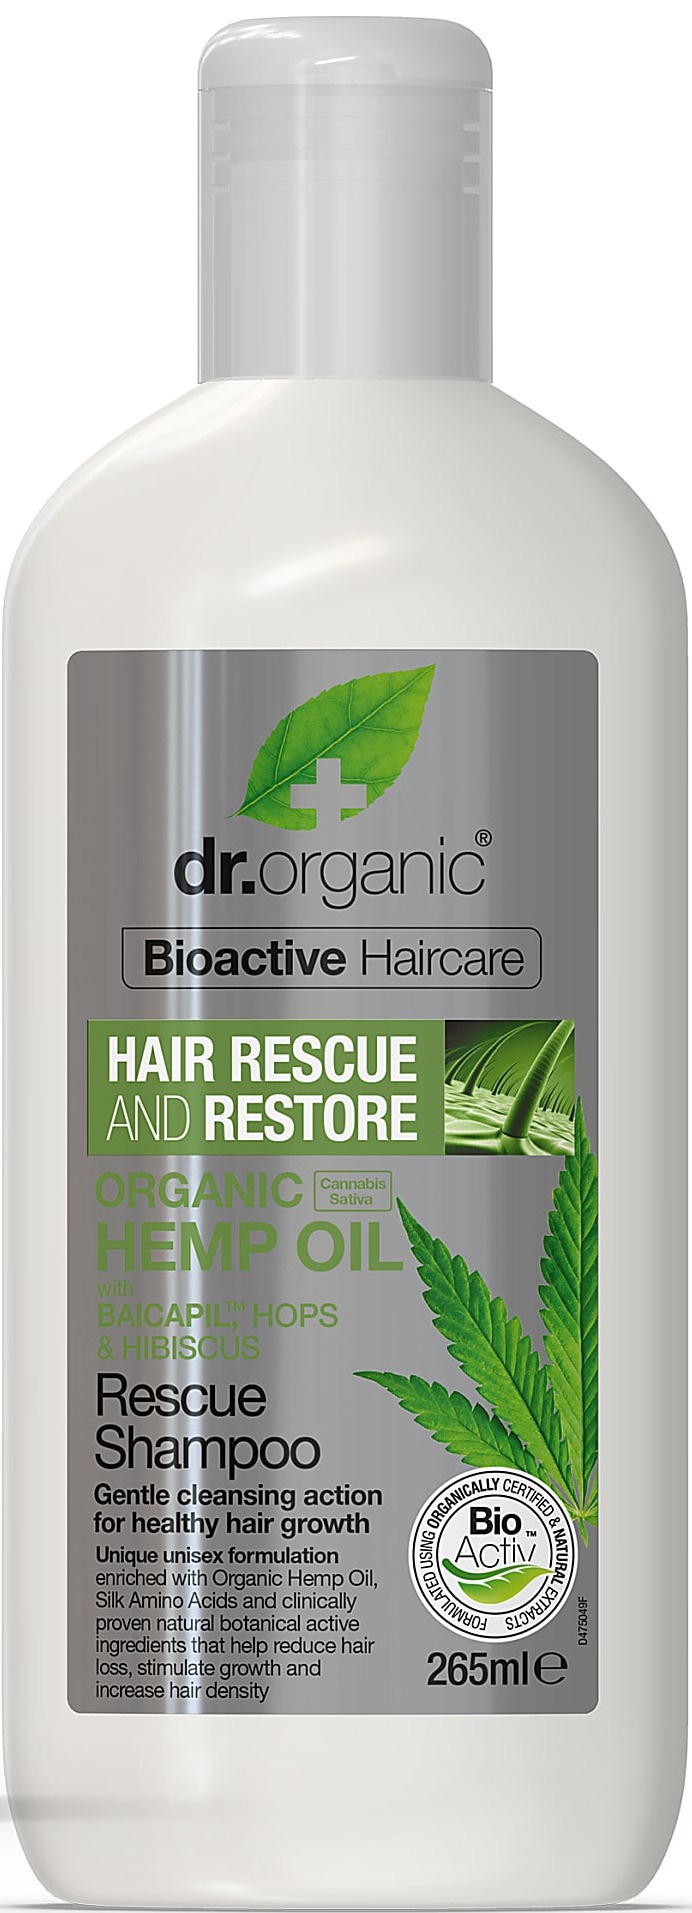 Dr Organic Hemp Oil Rescue Shampoo